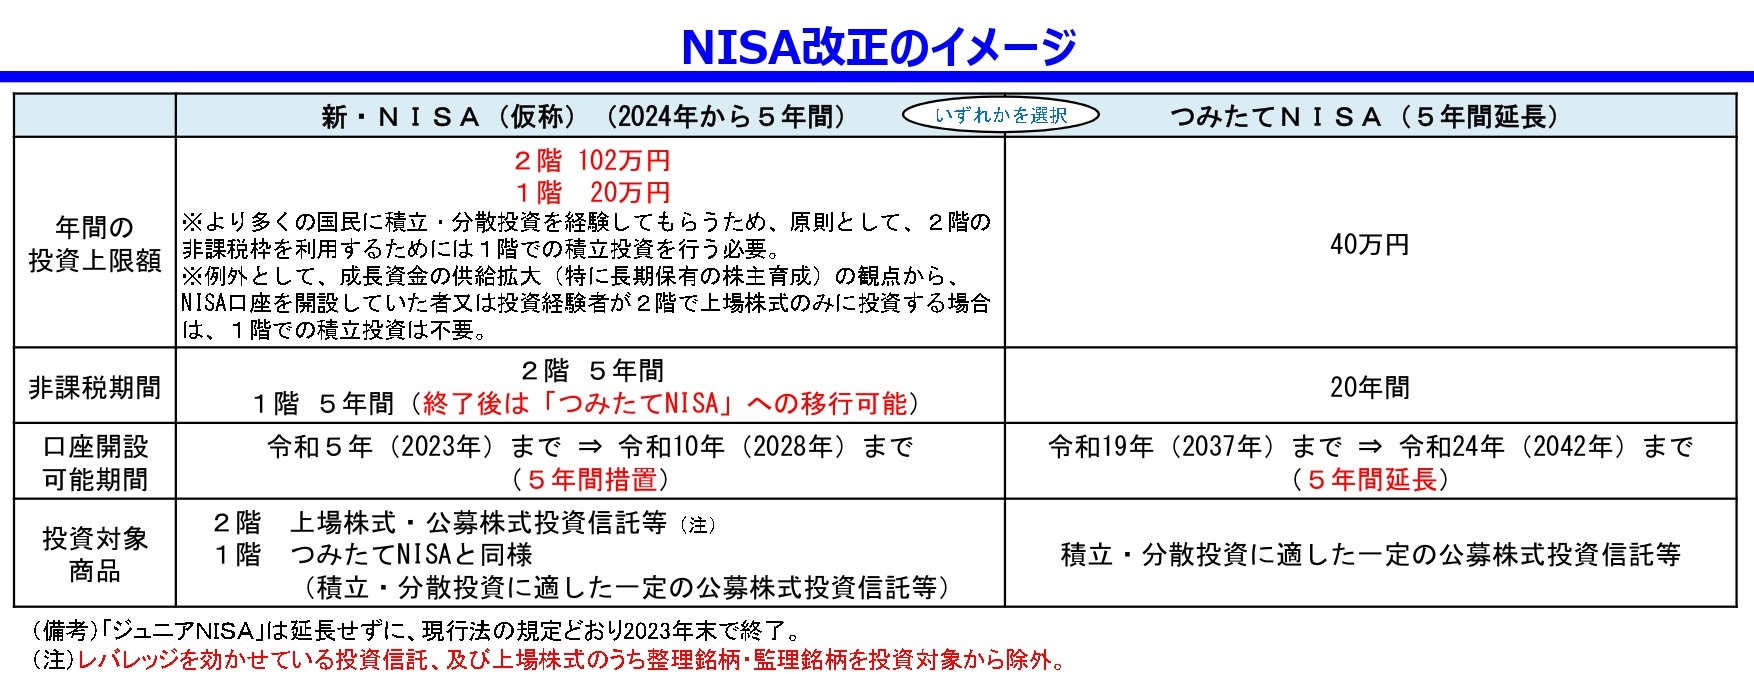 NISA改正のイメージ/金融庁